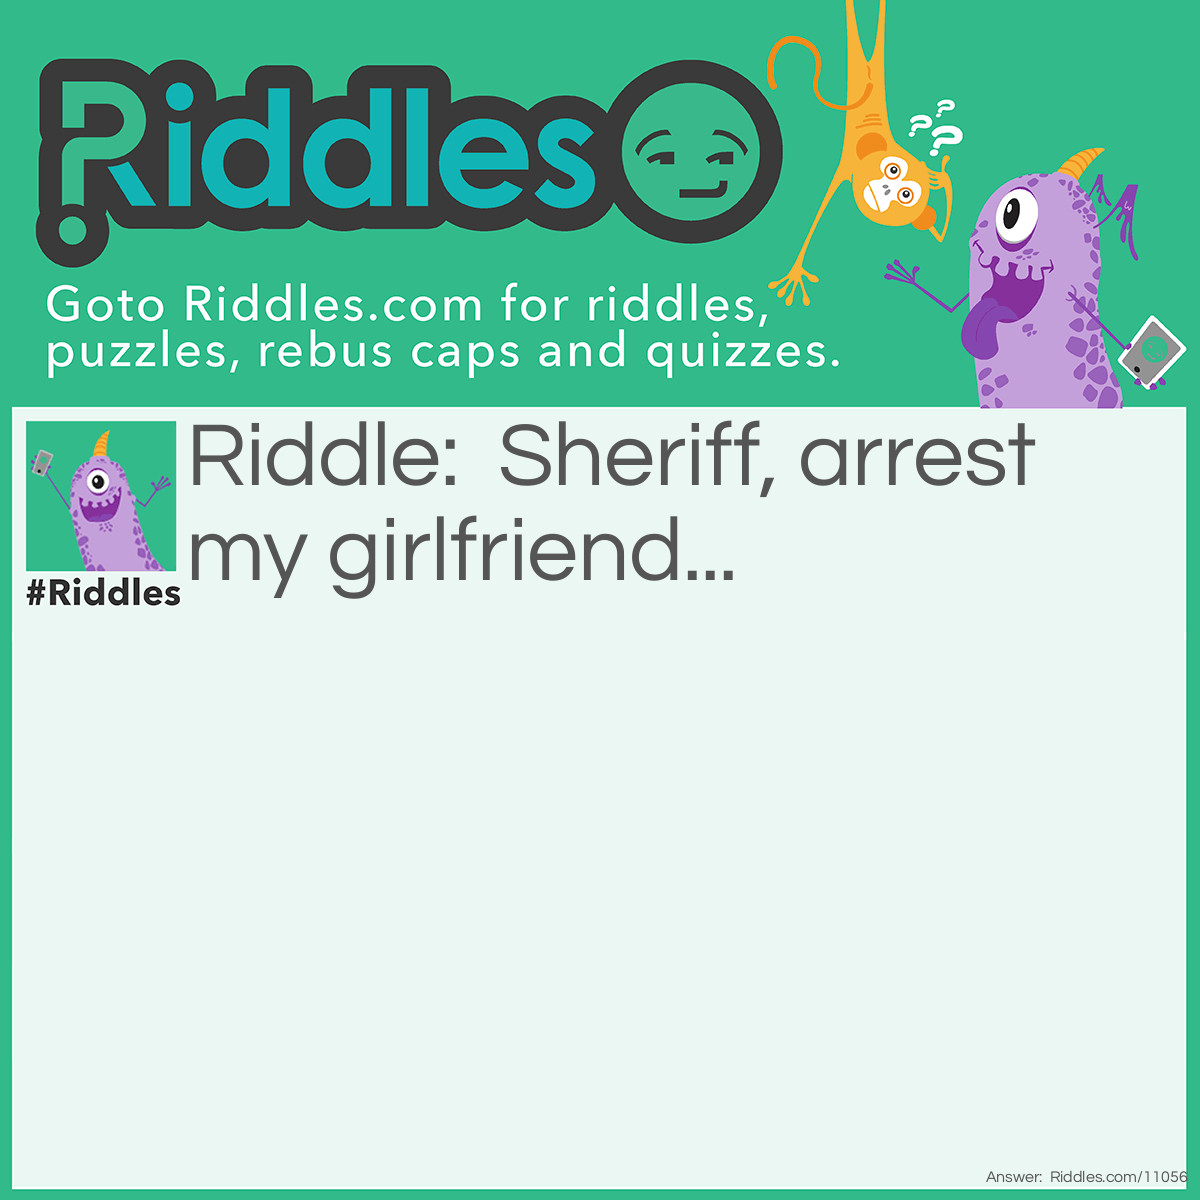 Riddle: Sheriff, arrest my girlfriend... Answer: She stole my heart ❤️.